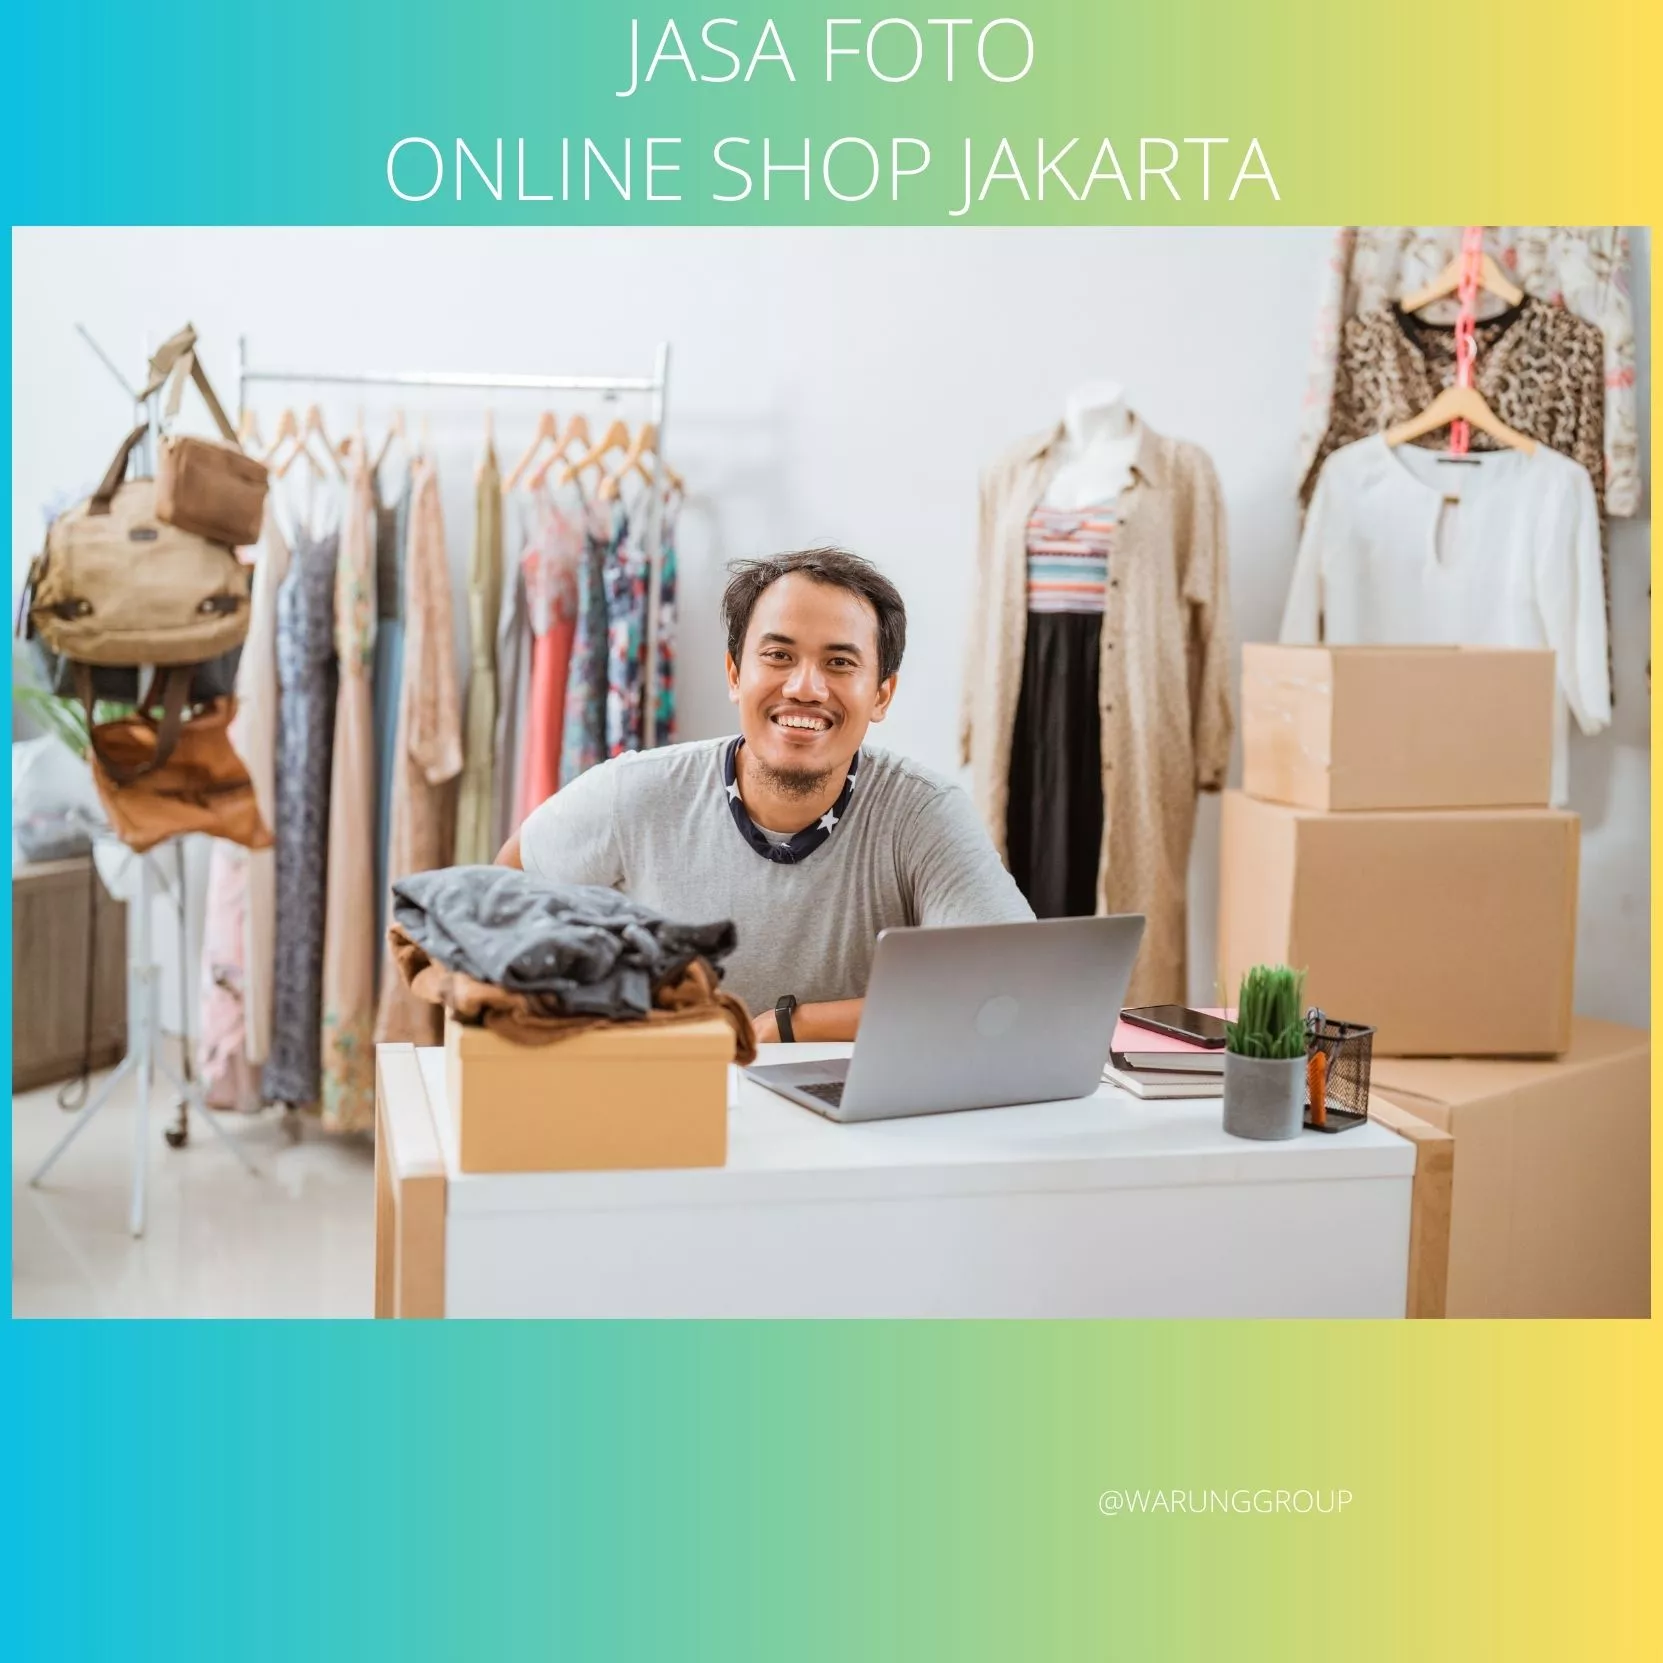 Jasa Foto Online Shop Jakarta